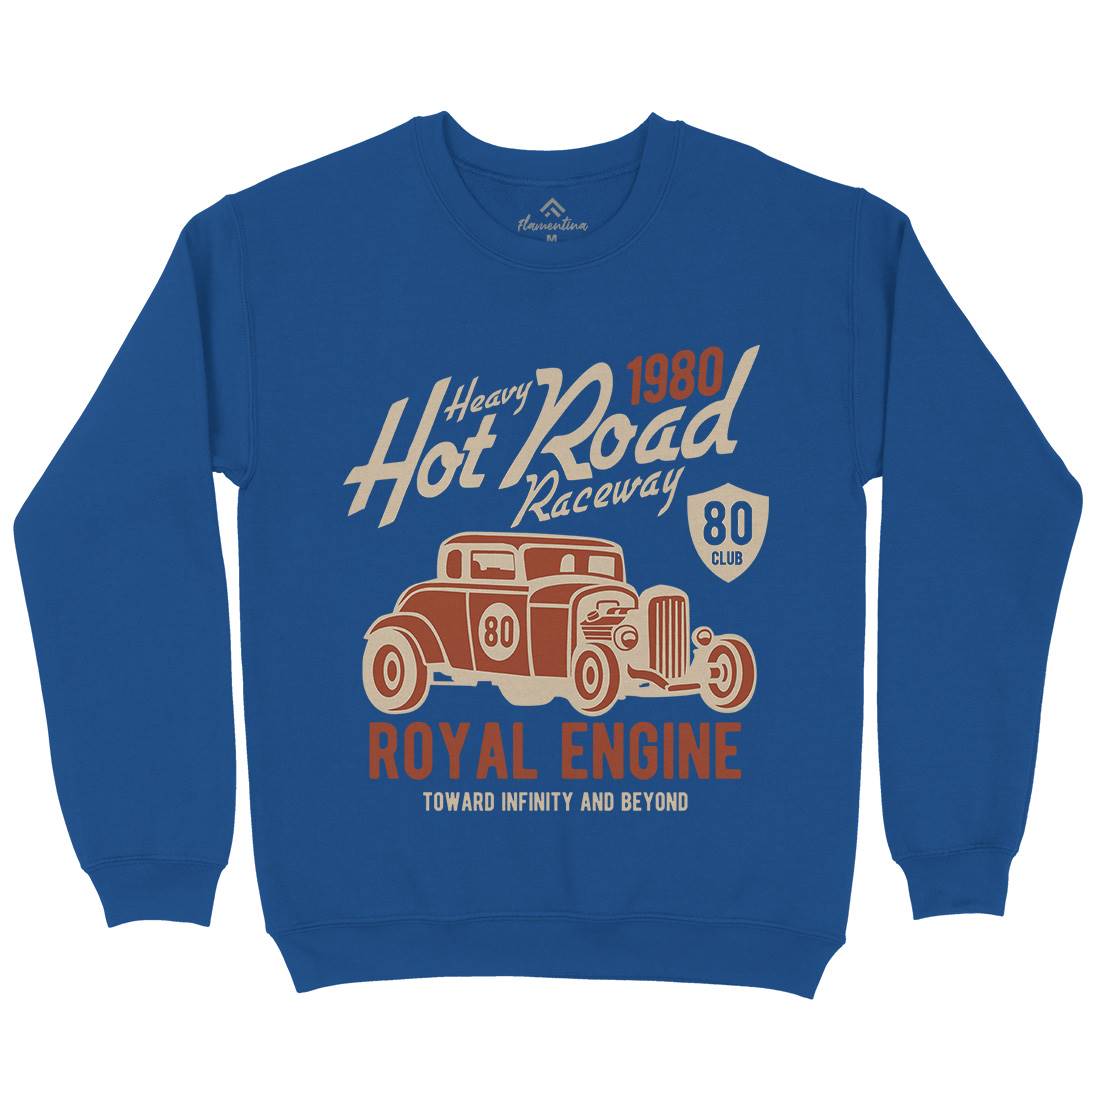 Heavy Hot Road Kids Crew Neck Sweatshirt Cars B411